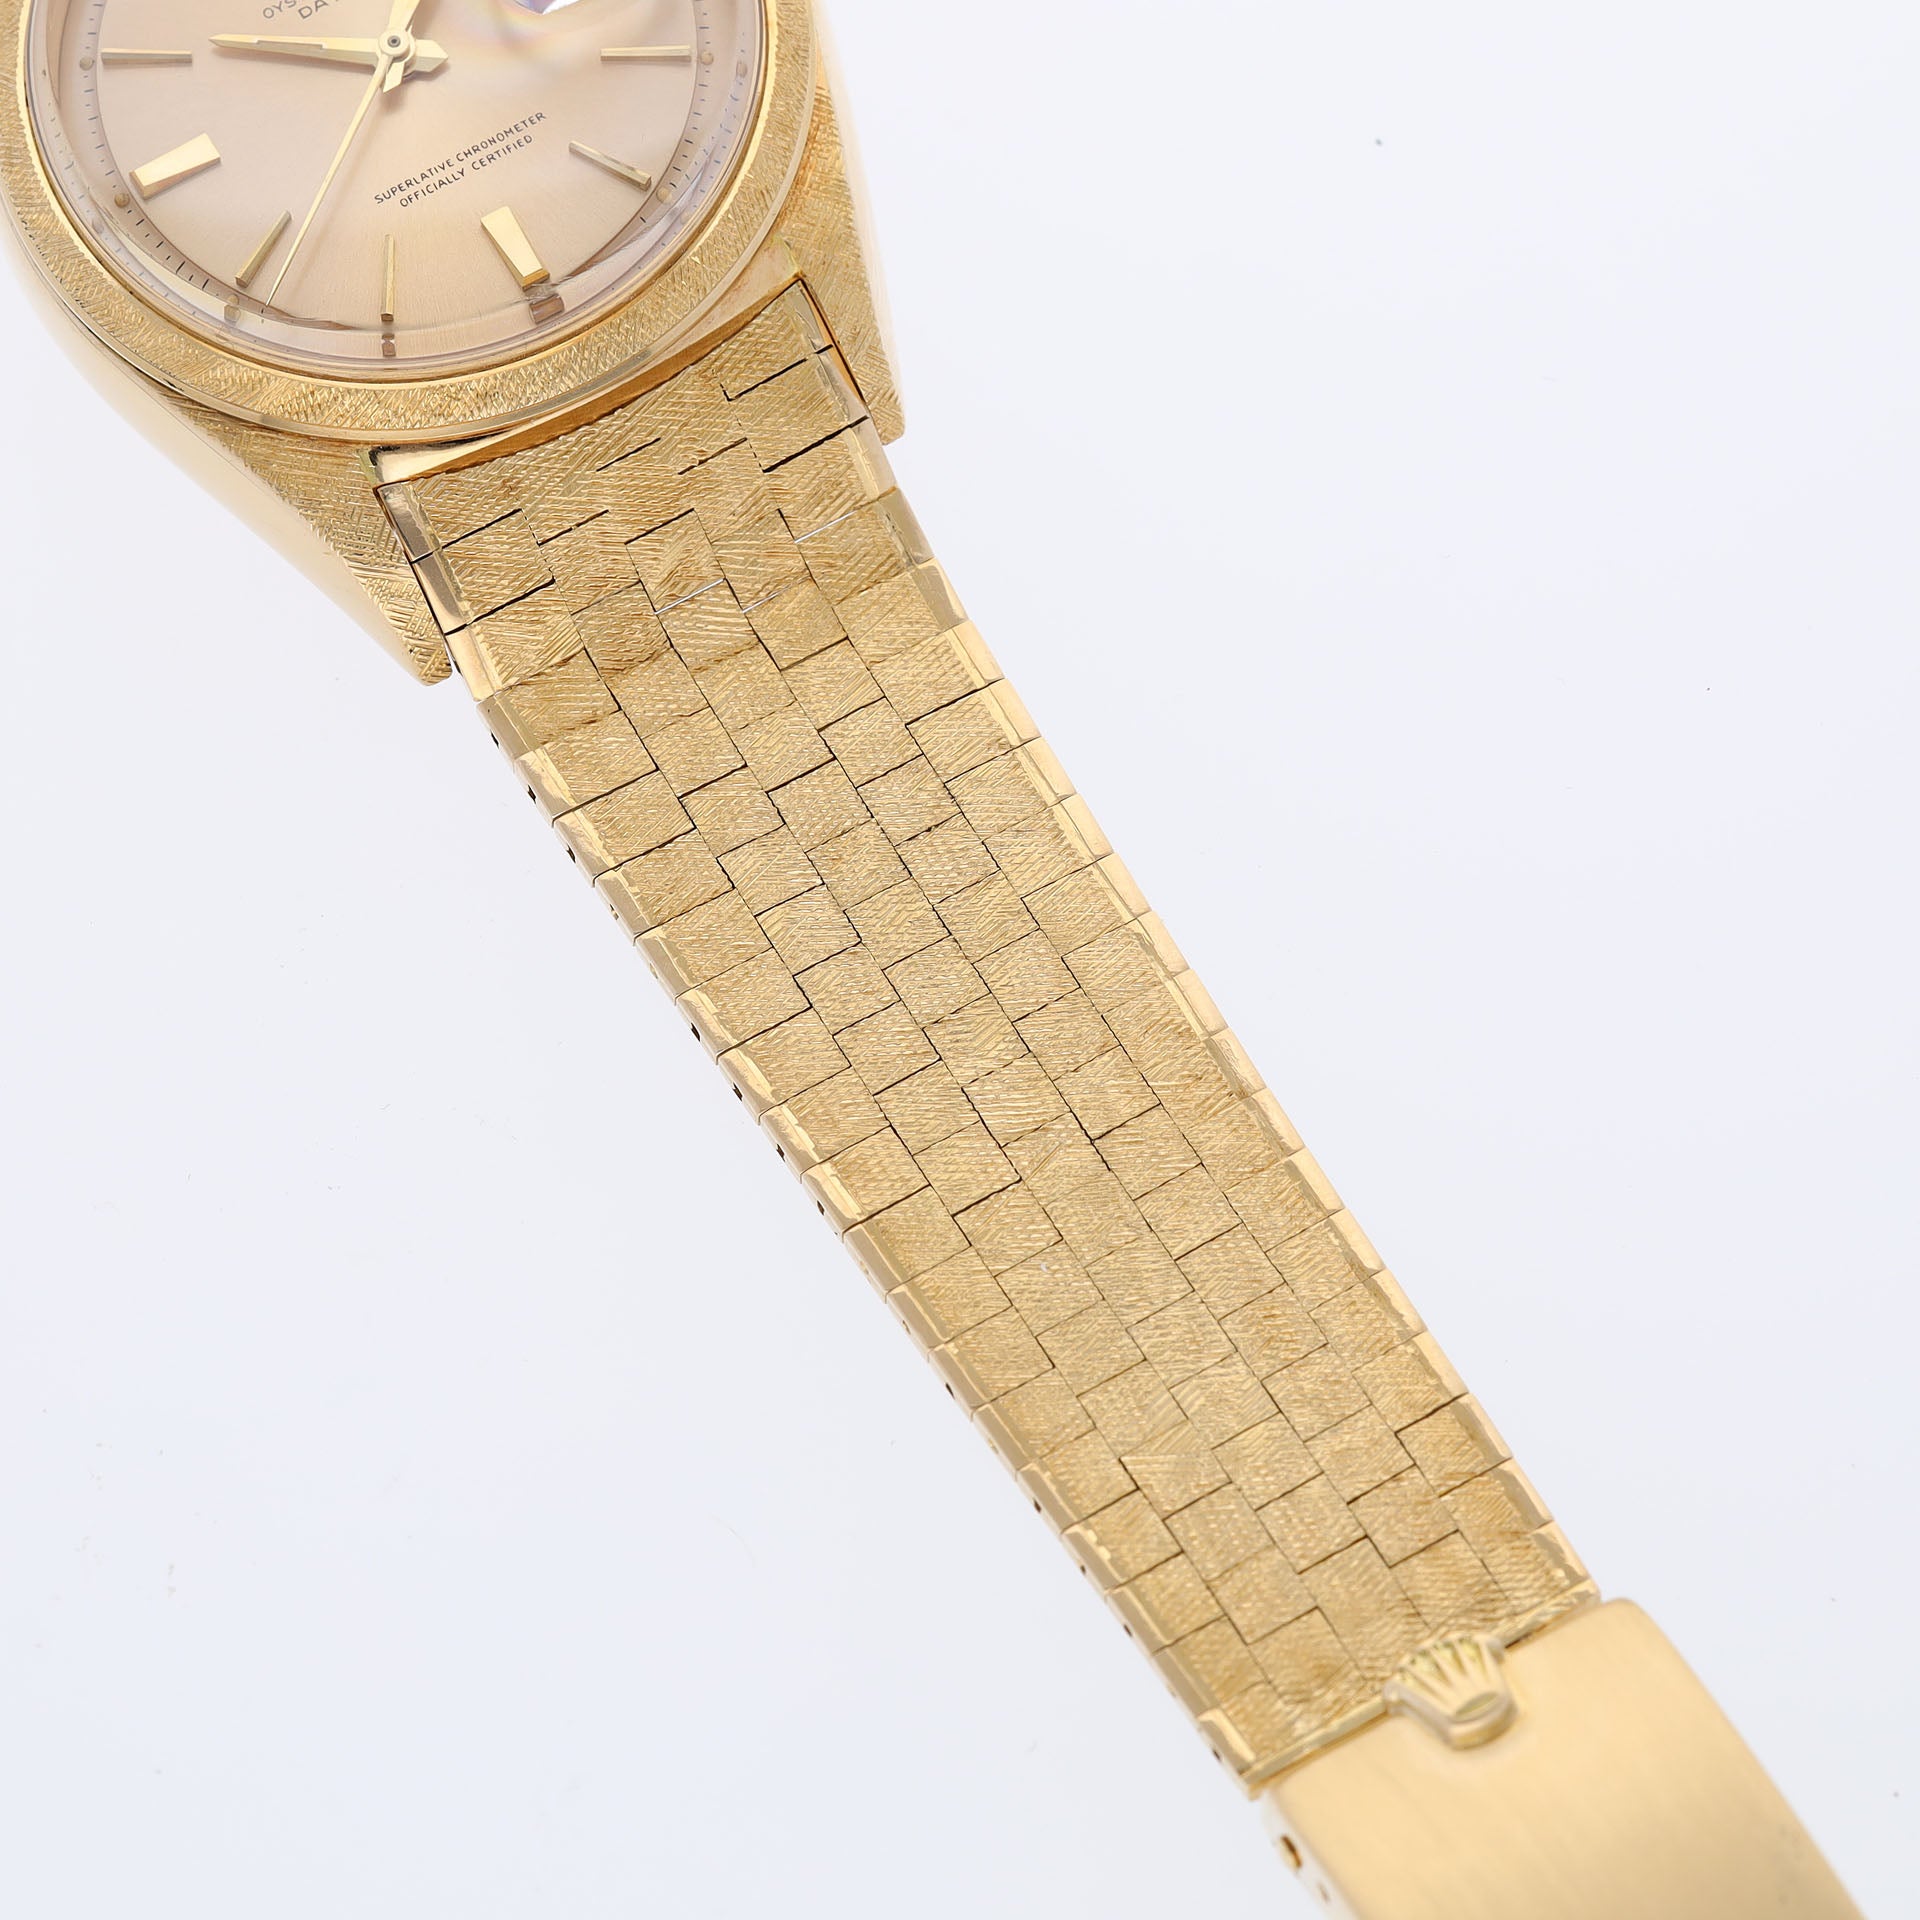  Rolex Day-Date 1806 Yellow Gold Florentine Finish on Brick Bracelet